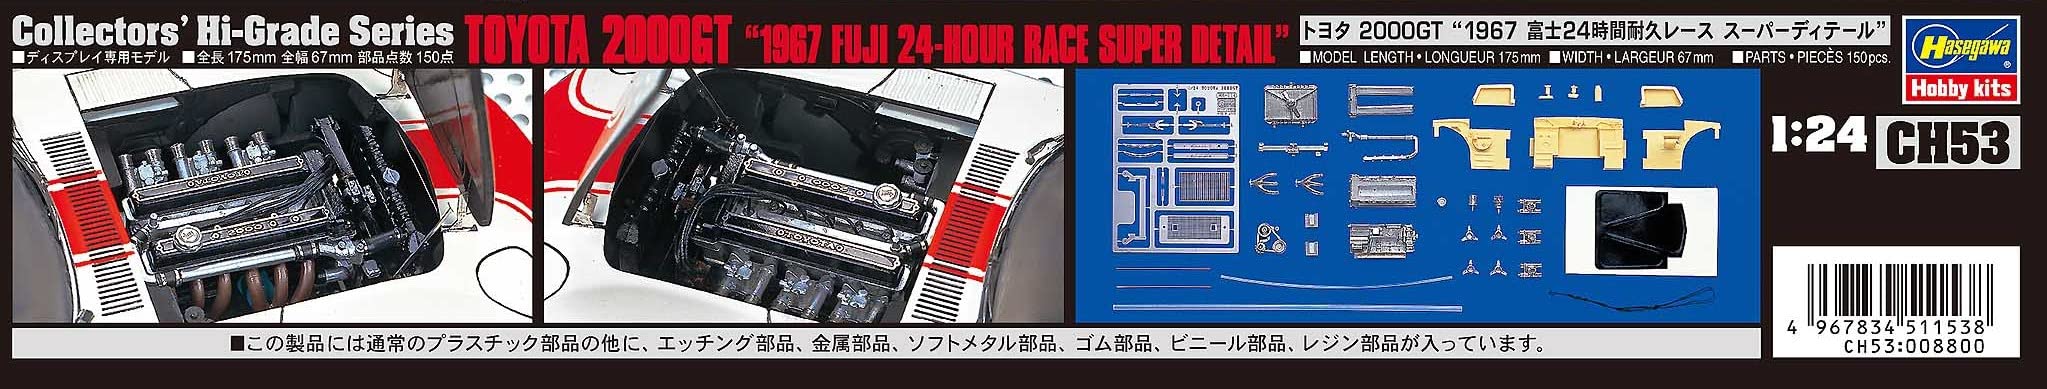 Hasegawa 1/24 TOYOTA 2000GT 1967 FUJI 24-HOUR RACE SUPER DETAIL CH53 ‎HA51153_5